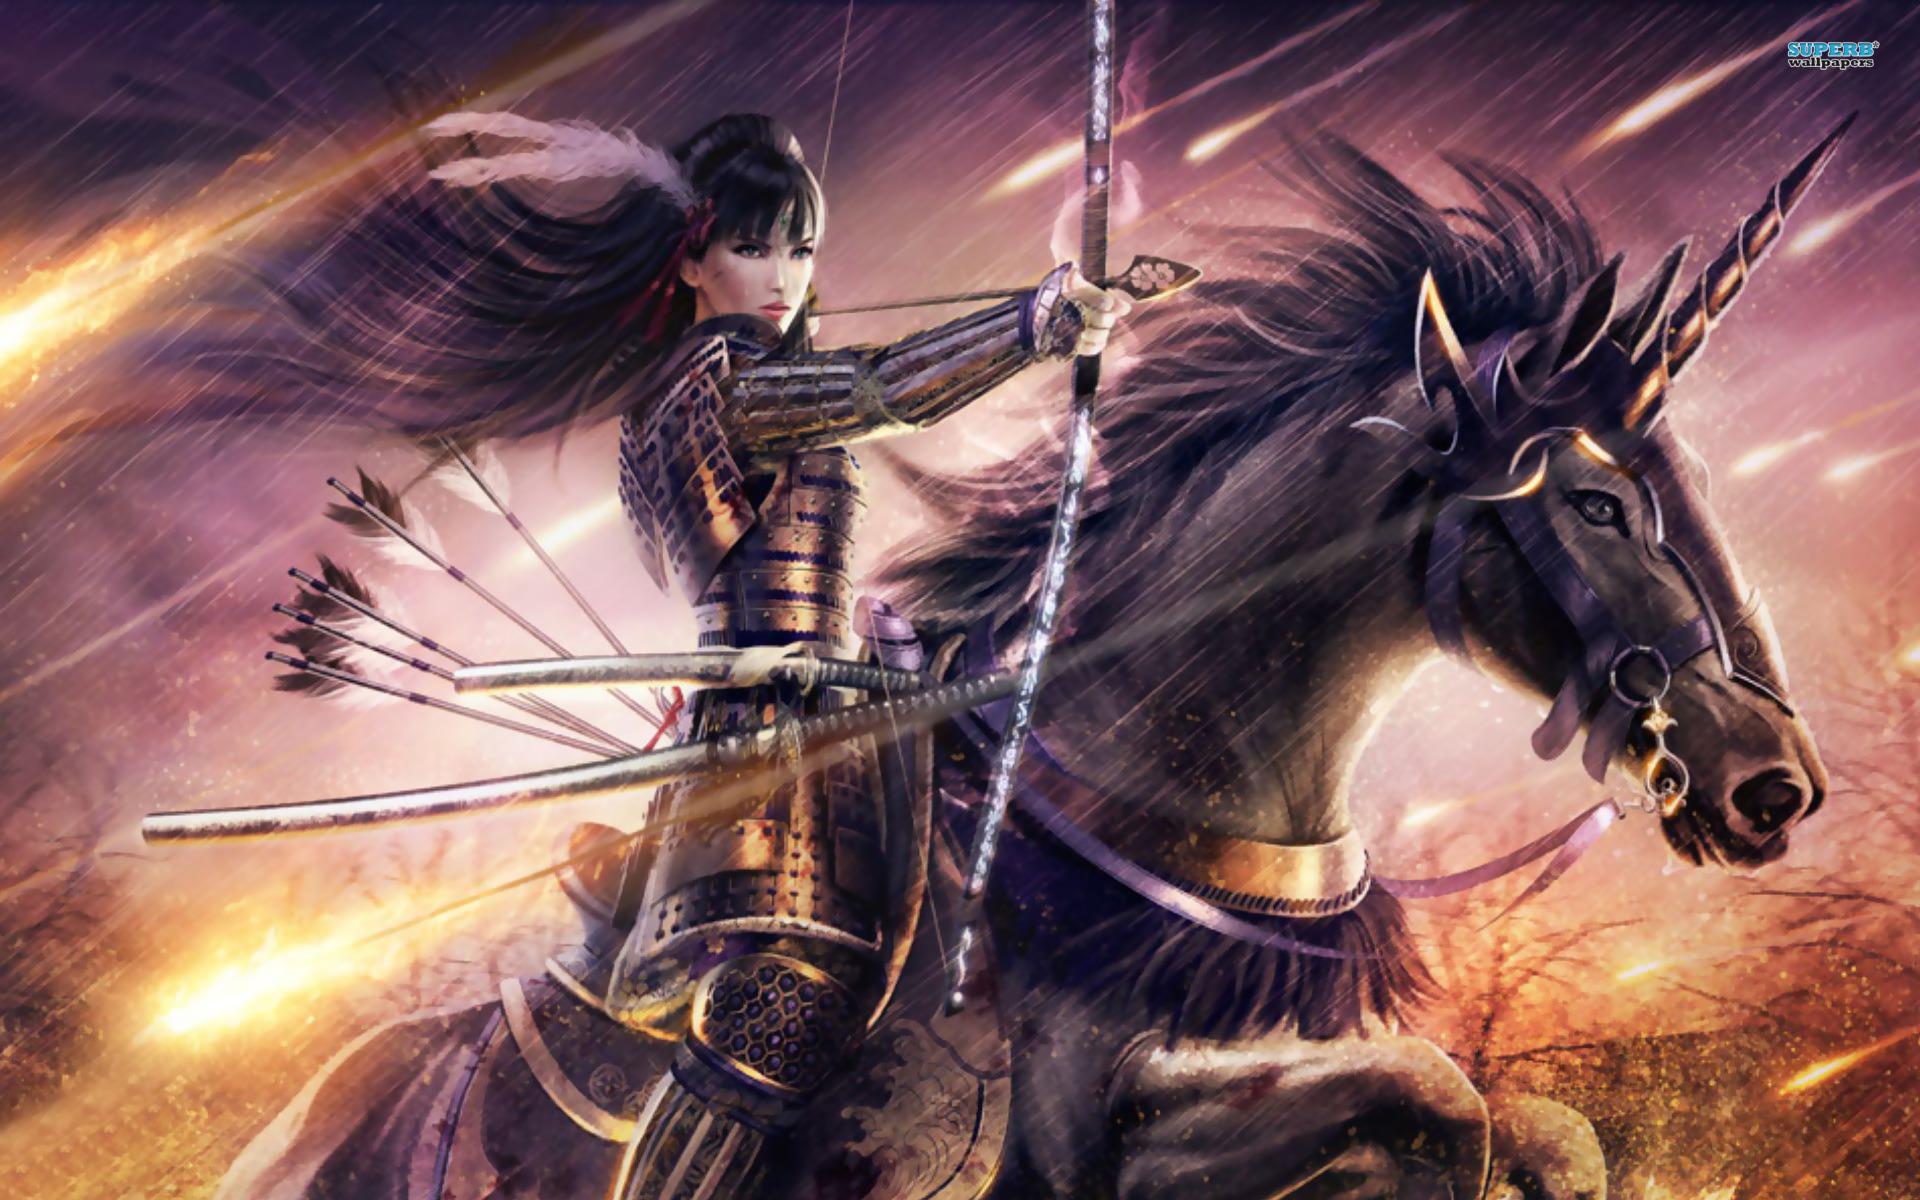 Anime Warrior Wallpaper - Anime Princess Warrior Girl - 1920x1200 Wallpaper  